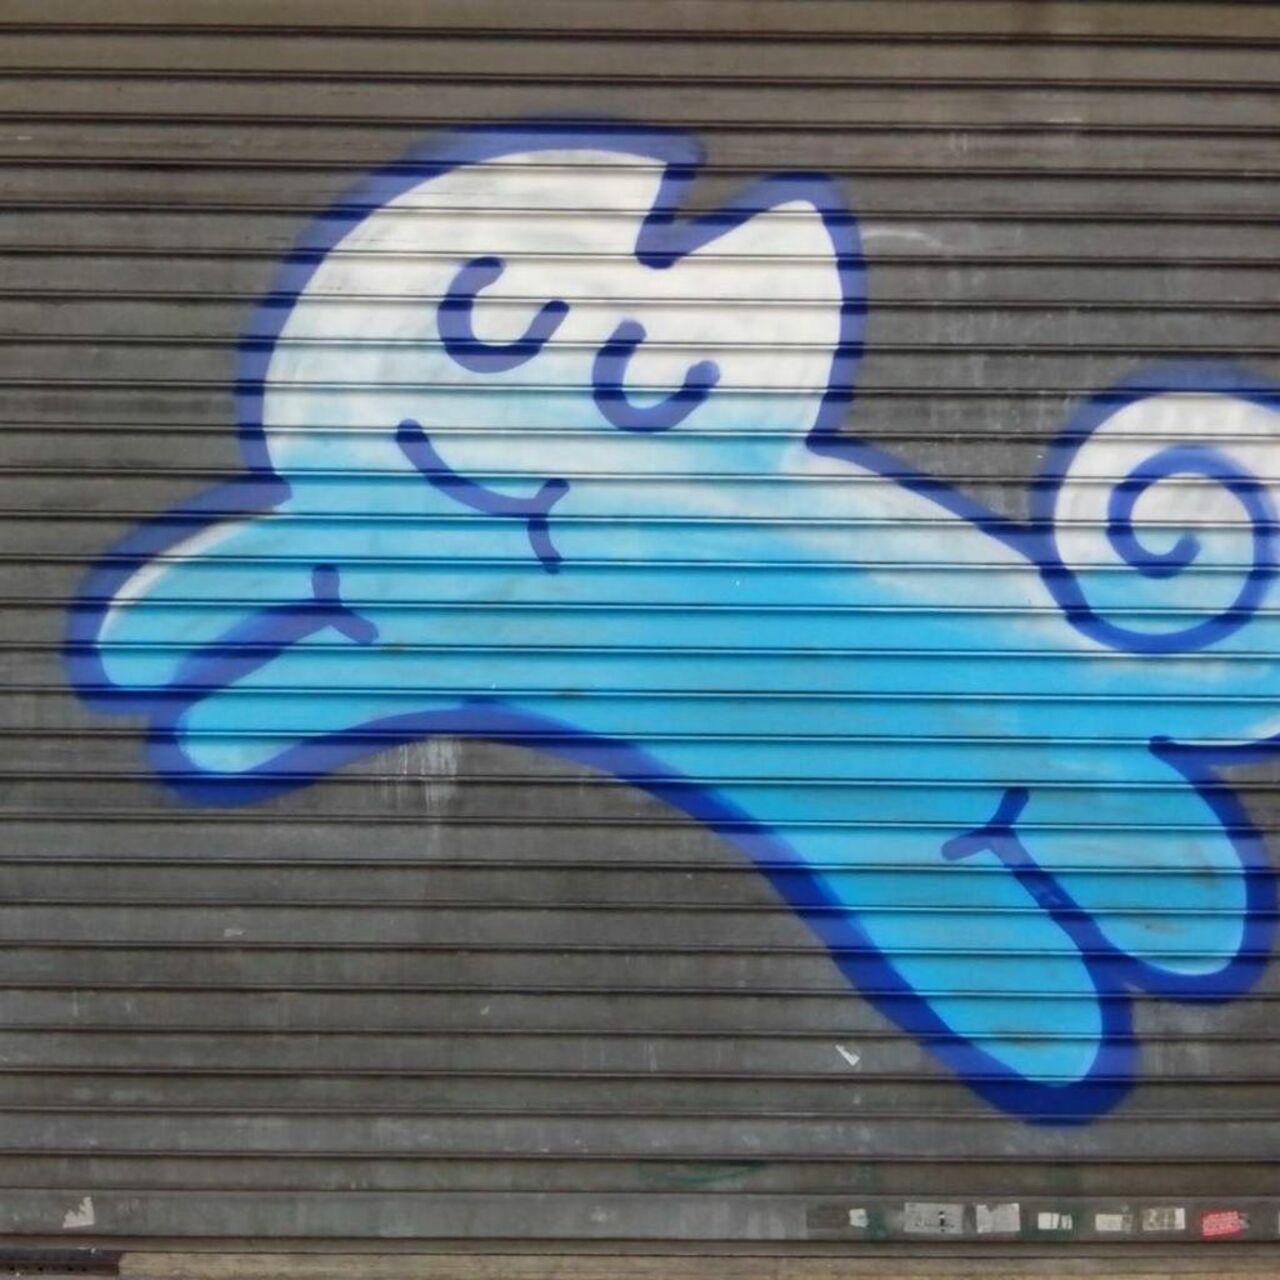 #streetart #streetarteverywhere #streetshot #graffitiart #graffiti #arturbain #urbanart  #rideaudefer #stencil #spr… https://t.co/yDiwgqjgL5